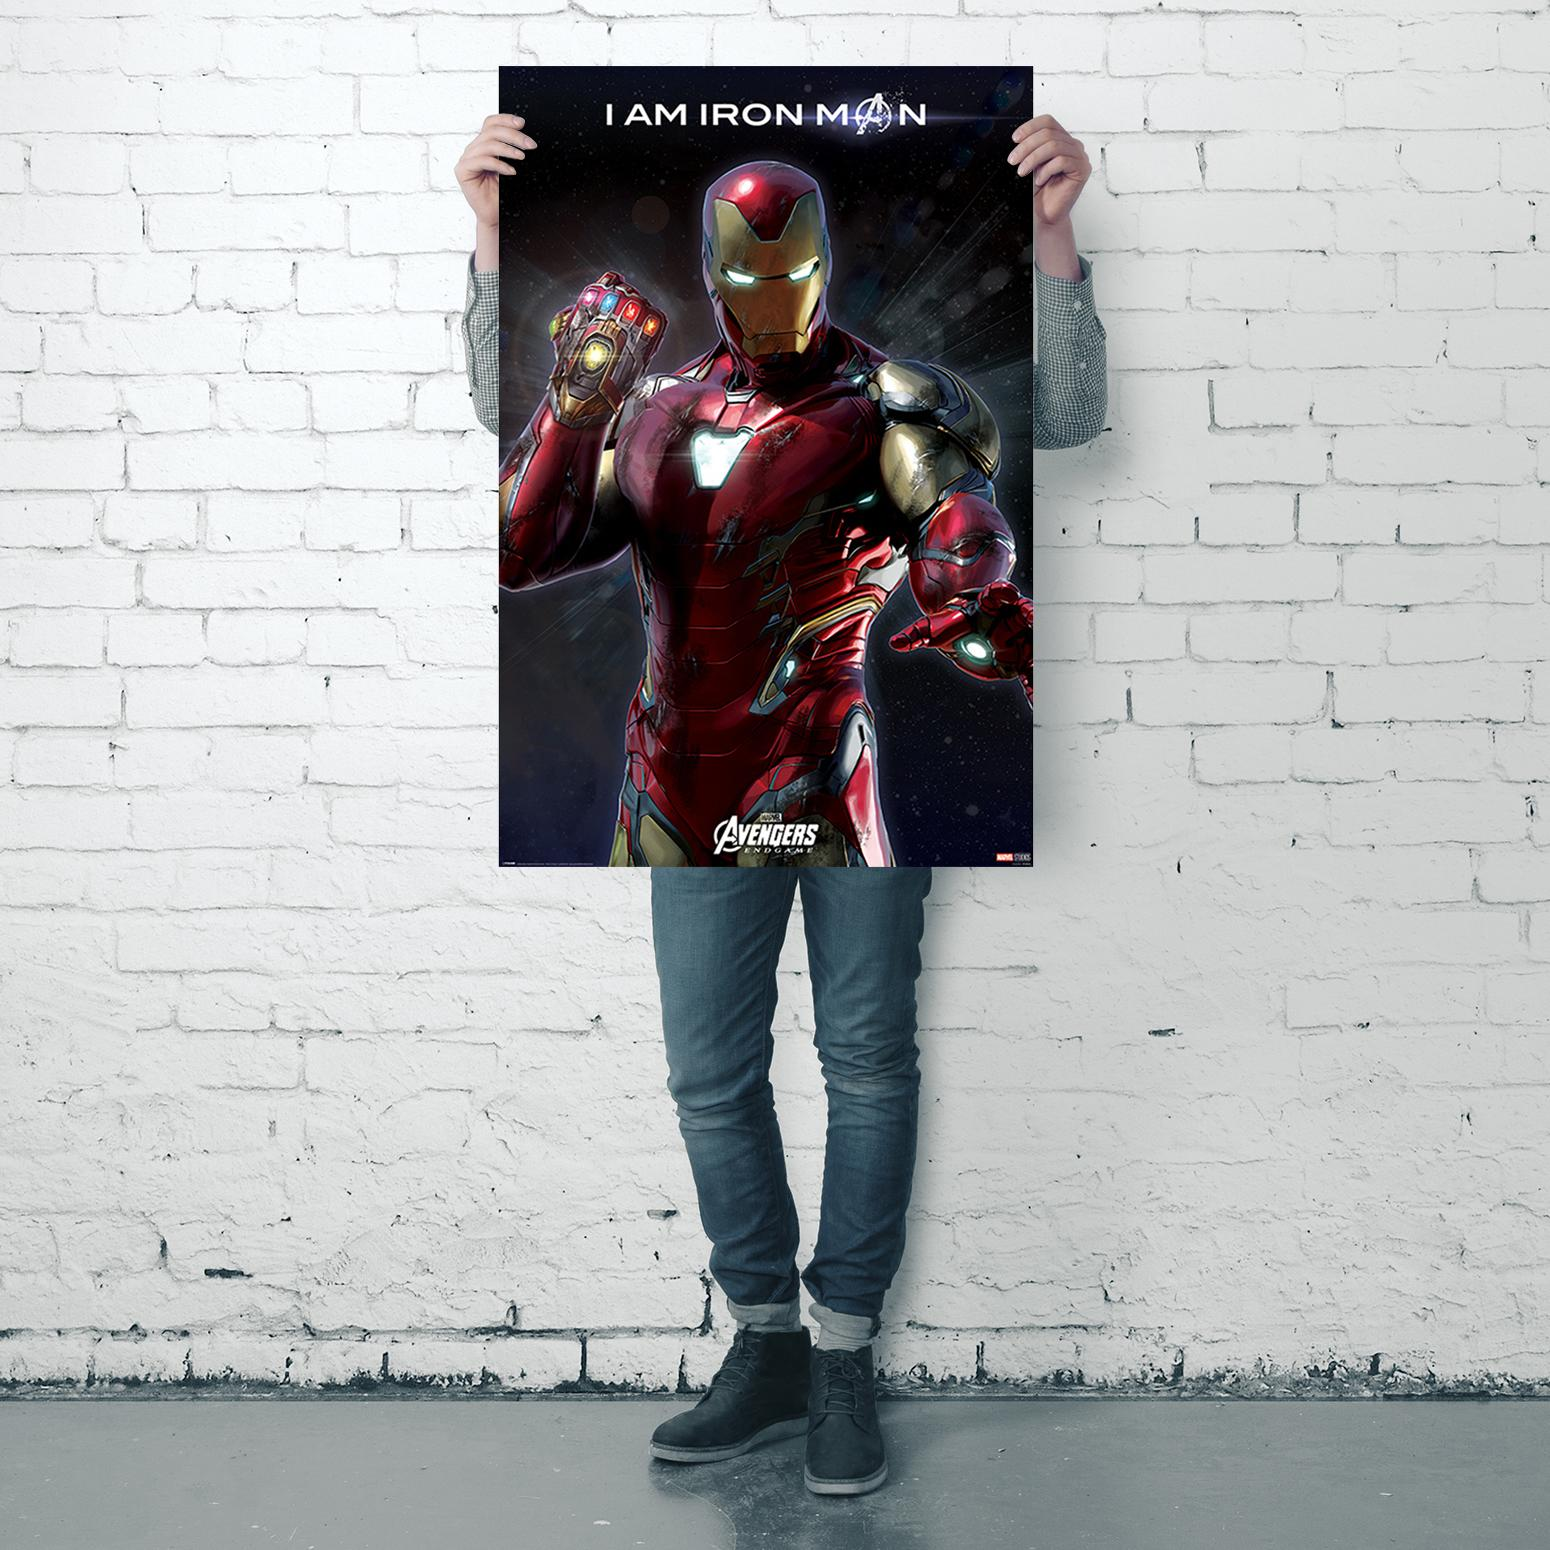 Iron Großformatige Poster INTERNATIONAL Poster PYRAMID Avengers: Man Endgame I Am